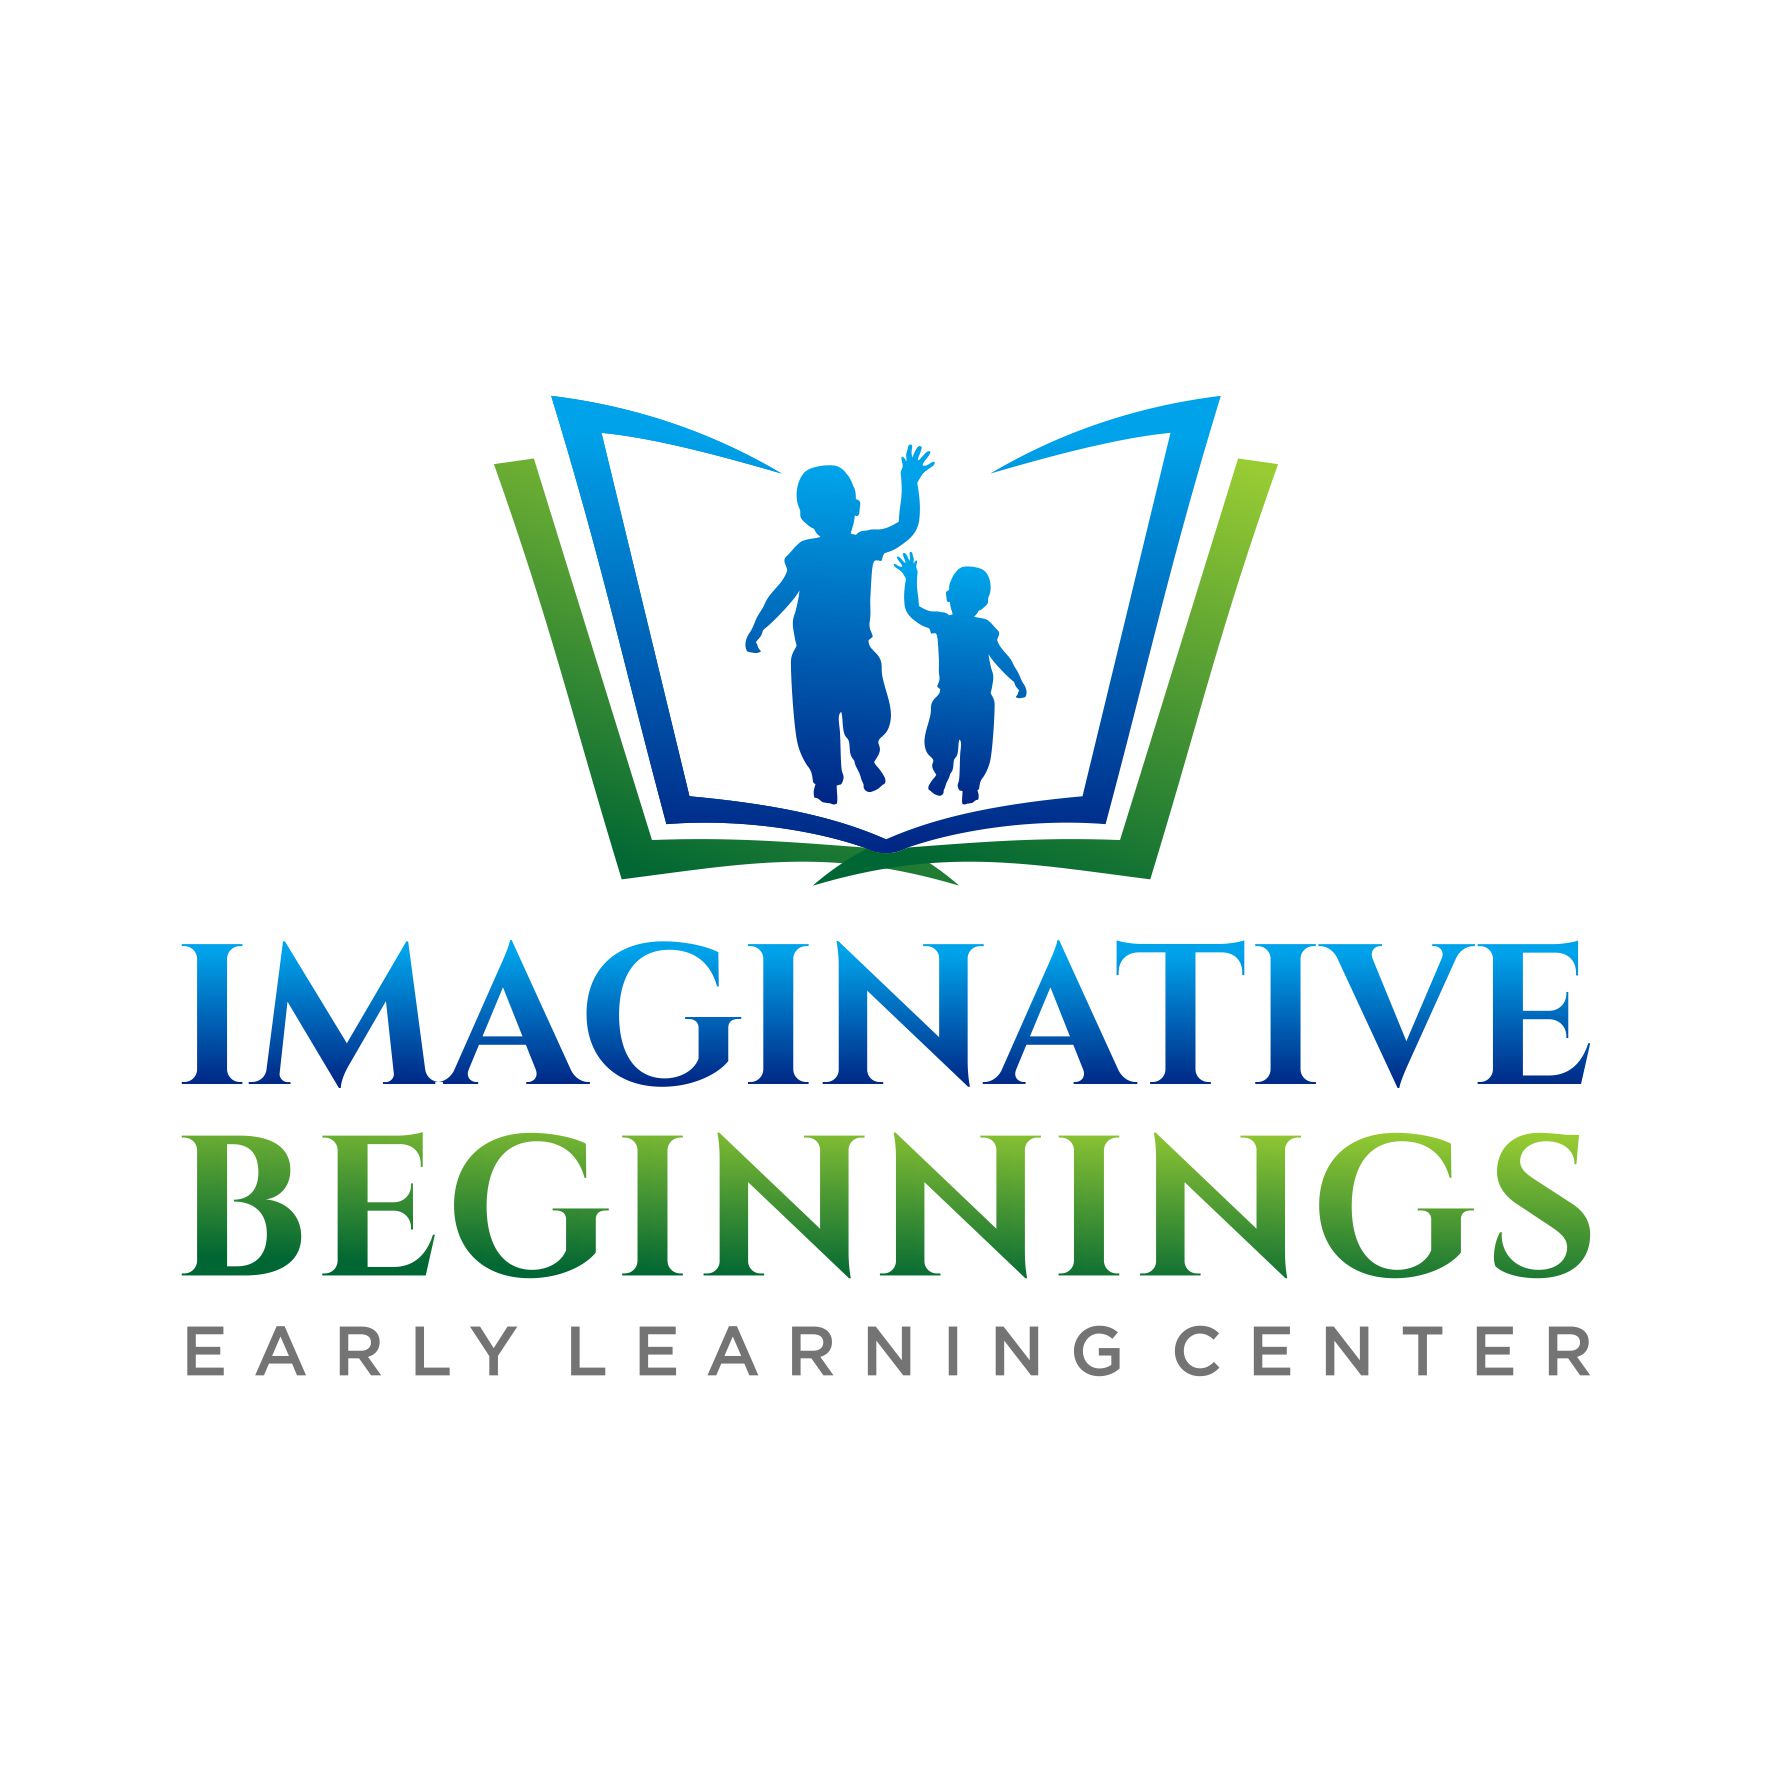 Imaginative Beginnings Early Learning Center logo